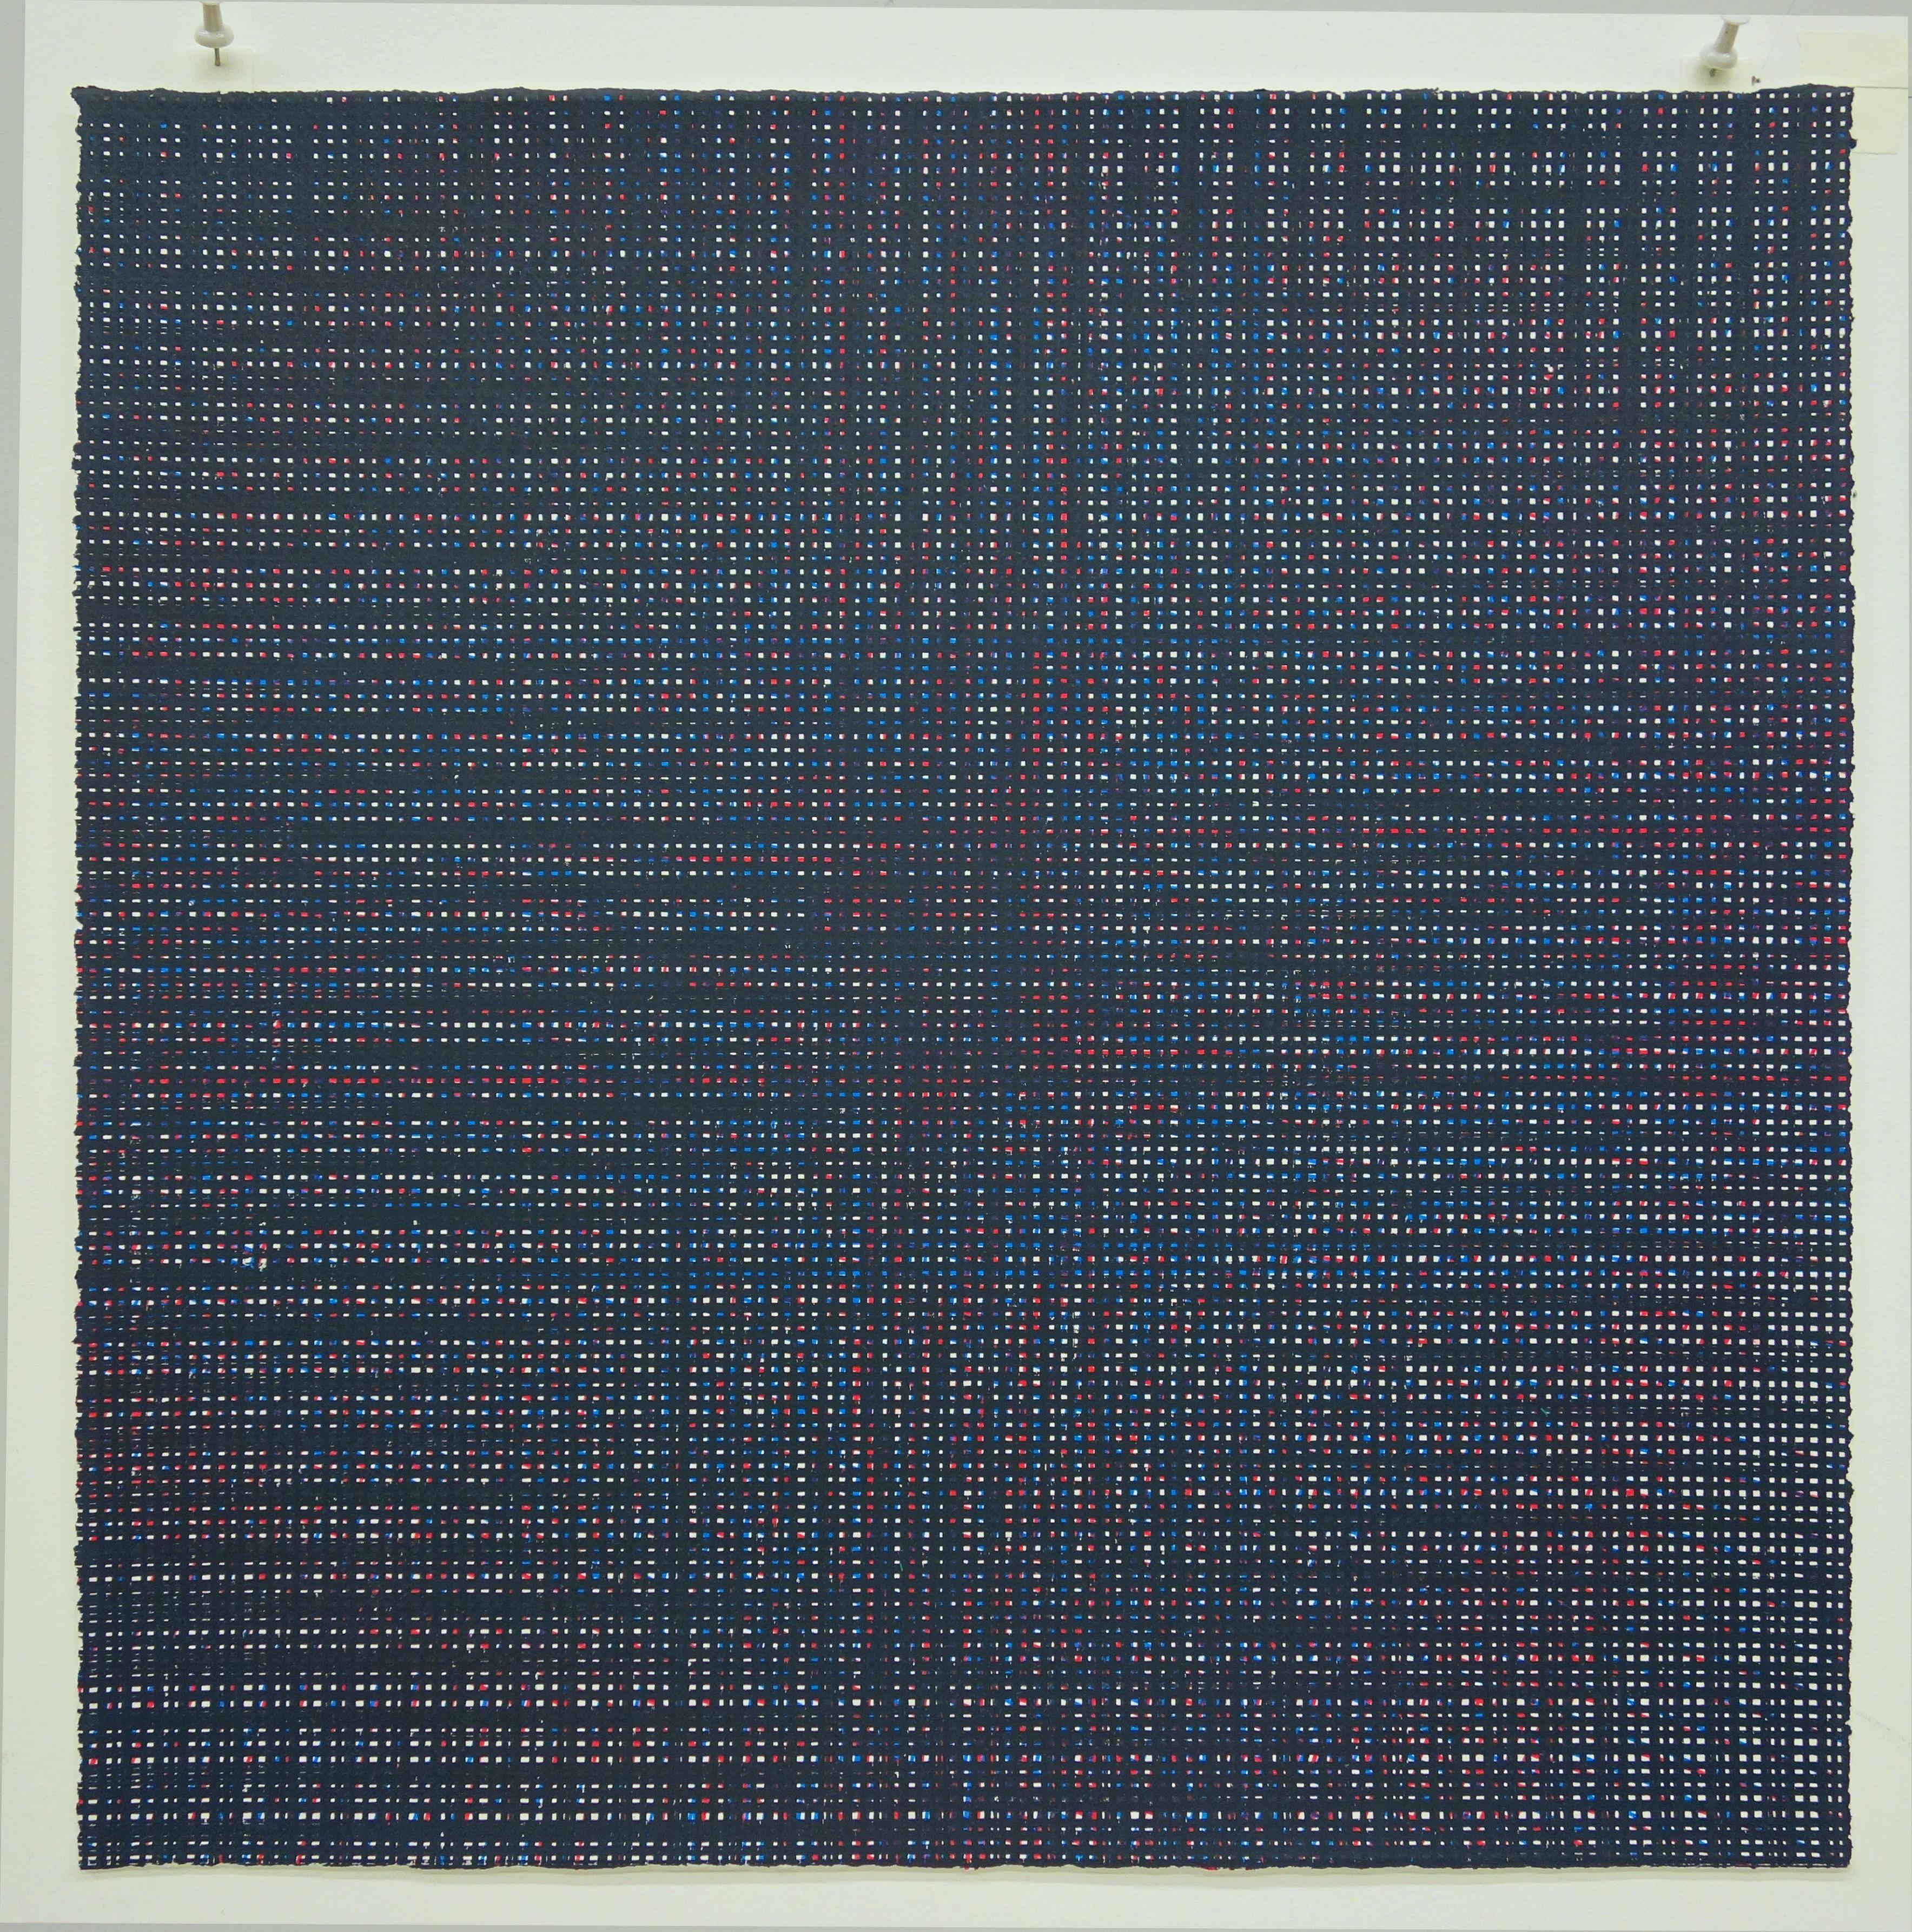 Rob de Oude, Untitled-Wassaic 8, 2016, silkscreen, 18 x 18 inches, Suite of 10 1